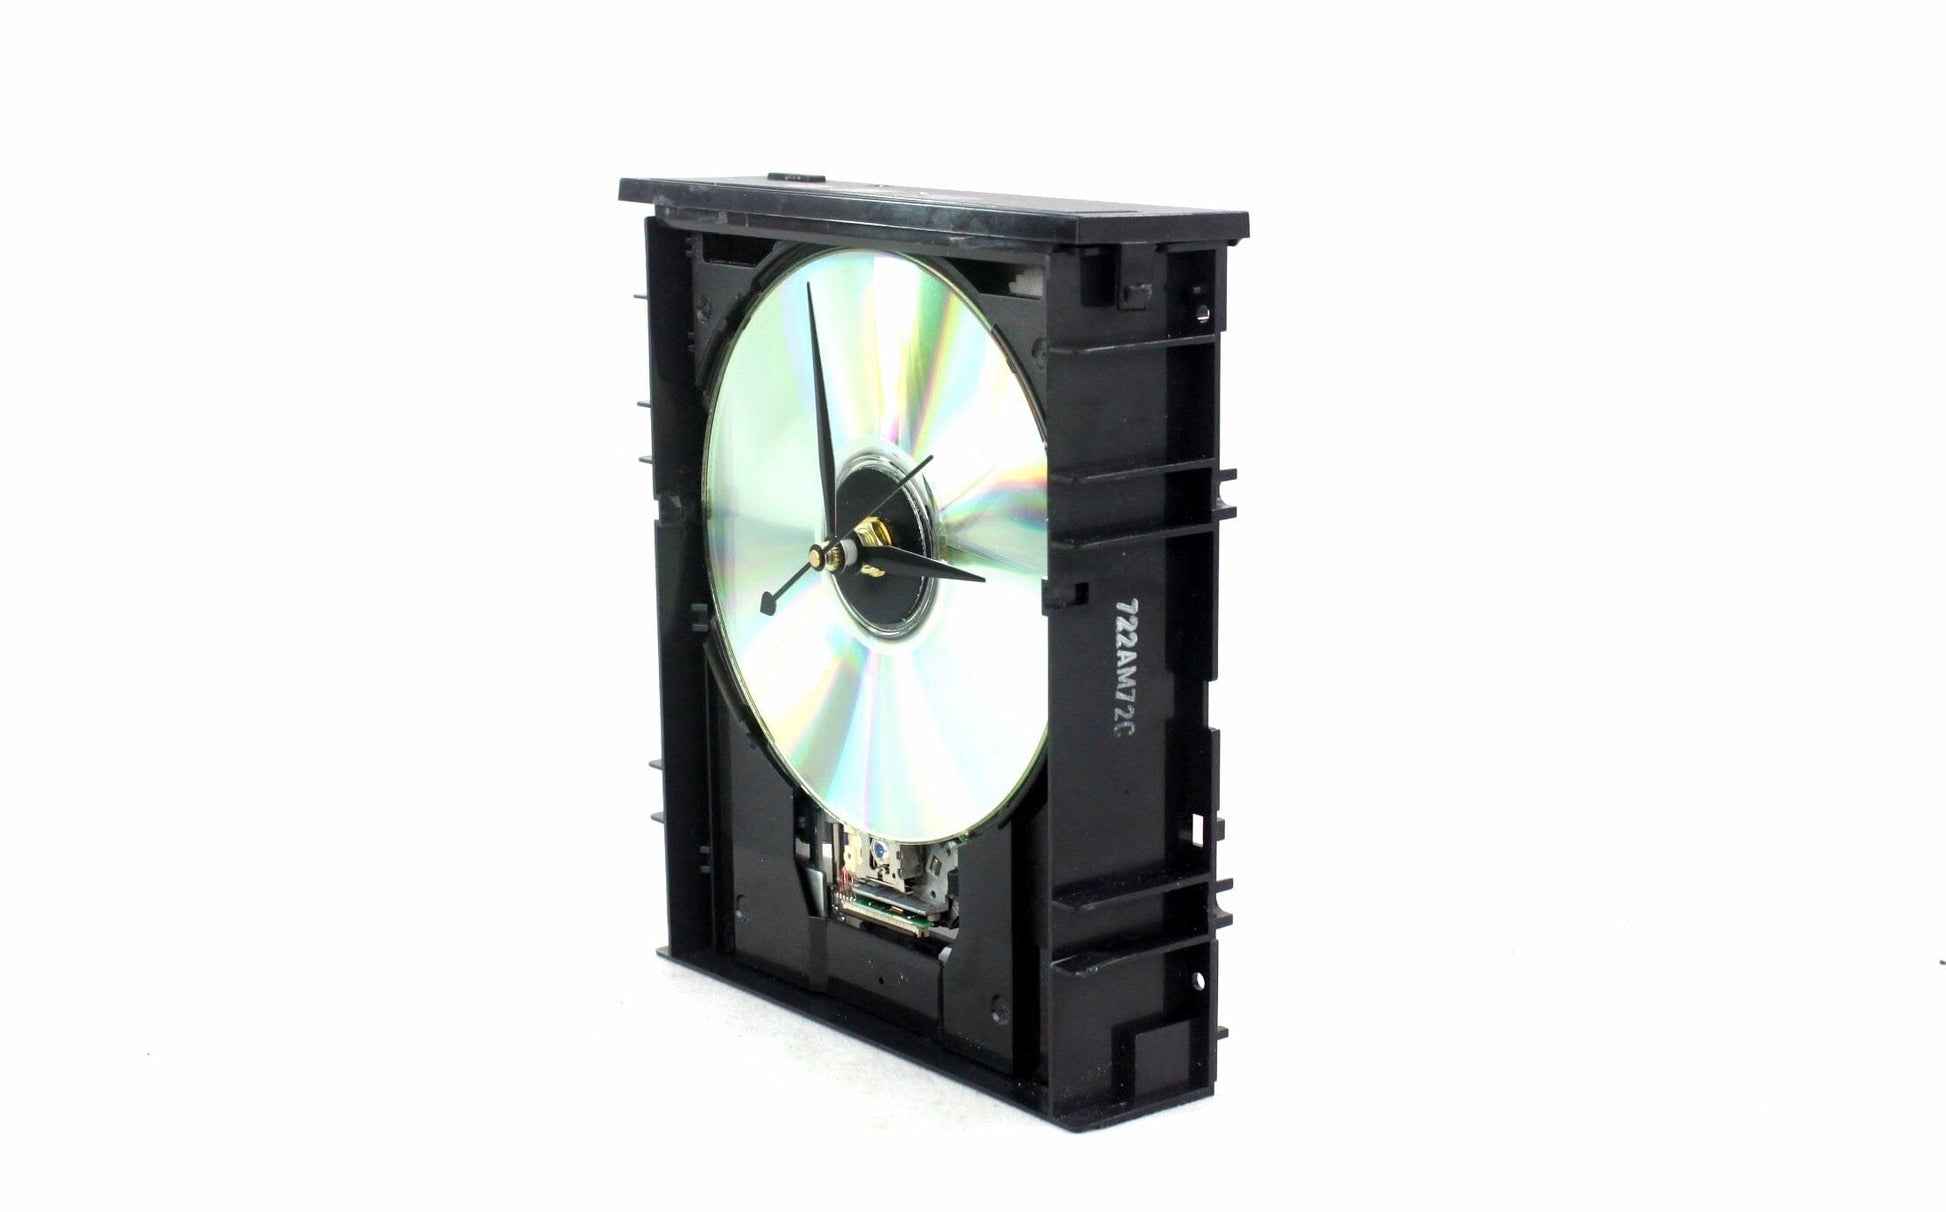 LightAndTimeArt Harddrive Clock Upcycled Black & Silver DVD Drive Clock Tower  - Modern Desk Clock - Gift for geeks - gift for IT